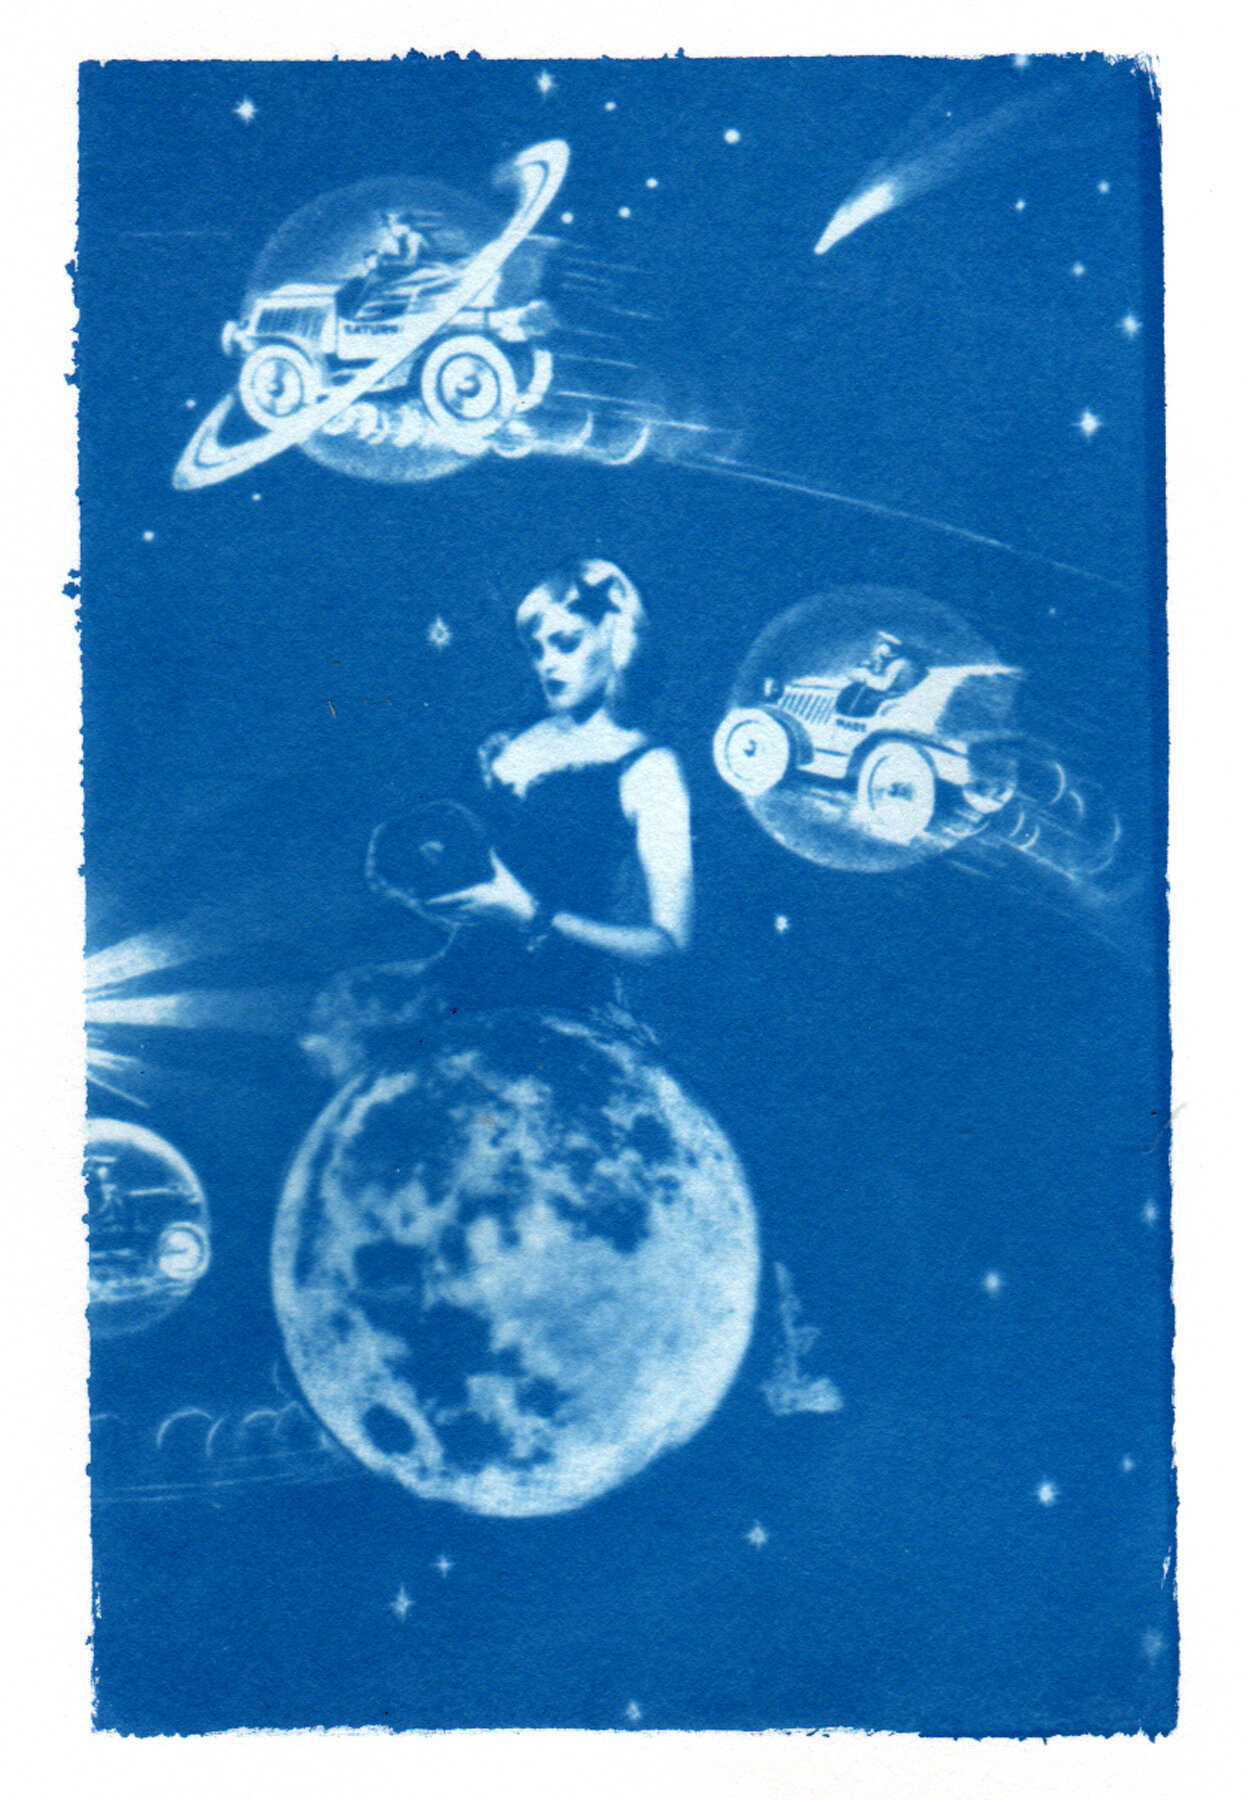  Amanda and her jukebox on the moon.  We Travel the Spaceways, cyanotype 2011. 